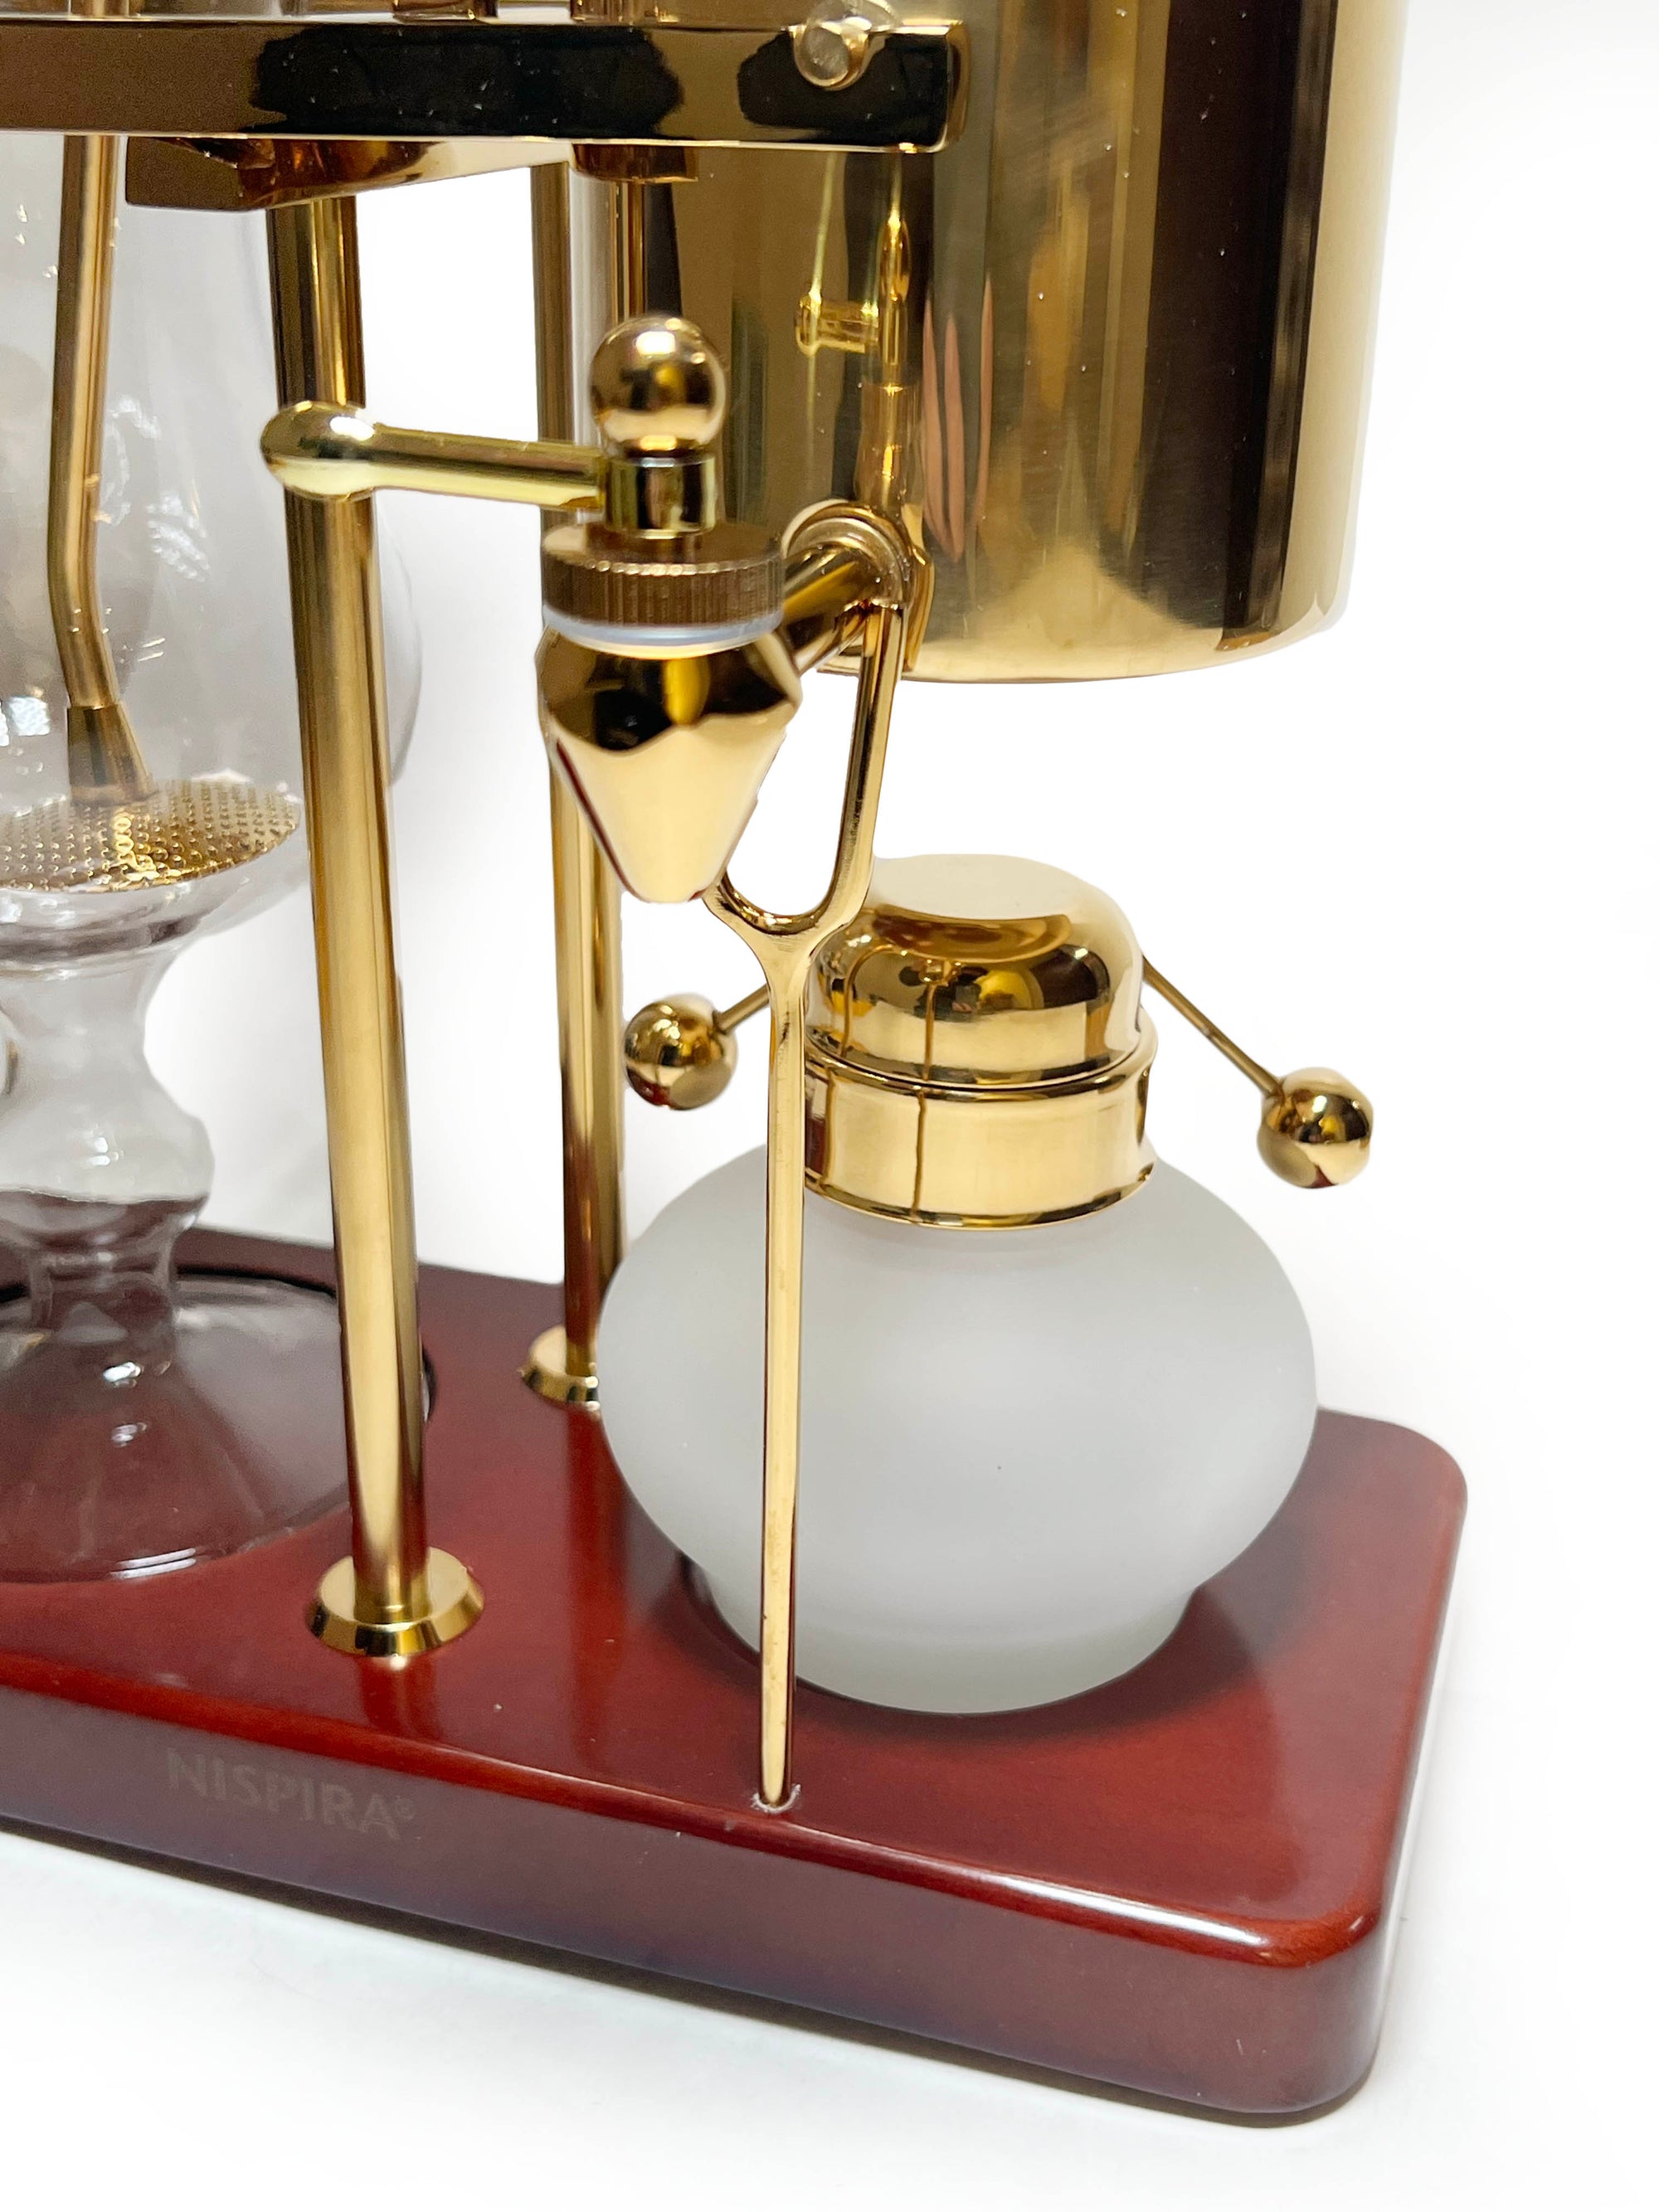 Nispira Belgian Belgium Luxury Royal Family Balance Syphon Siphon Coffee Maker Gold Color 1 Set